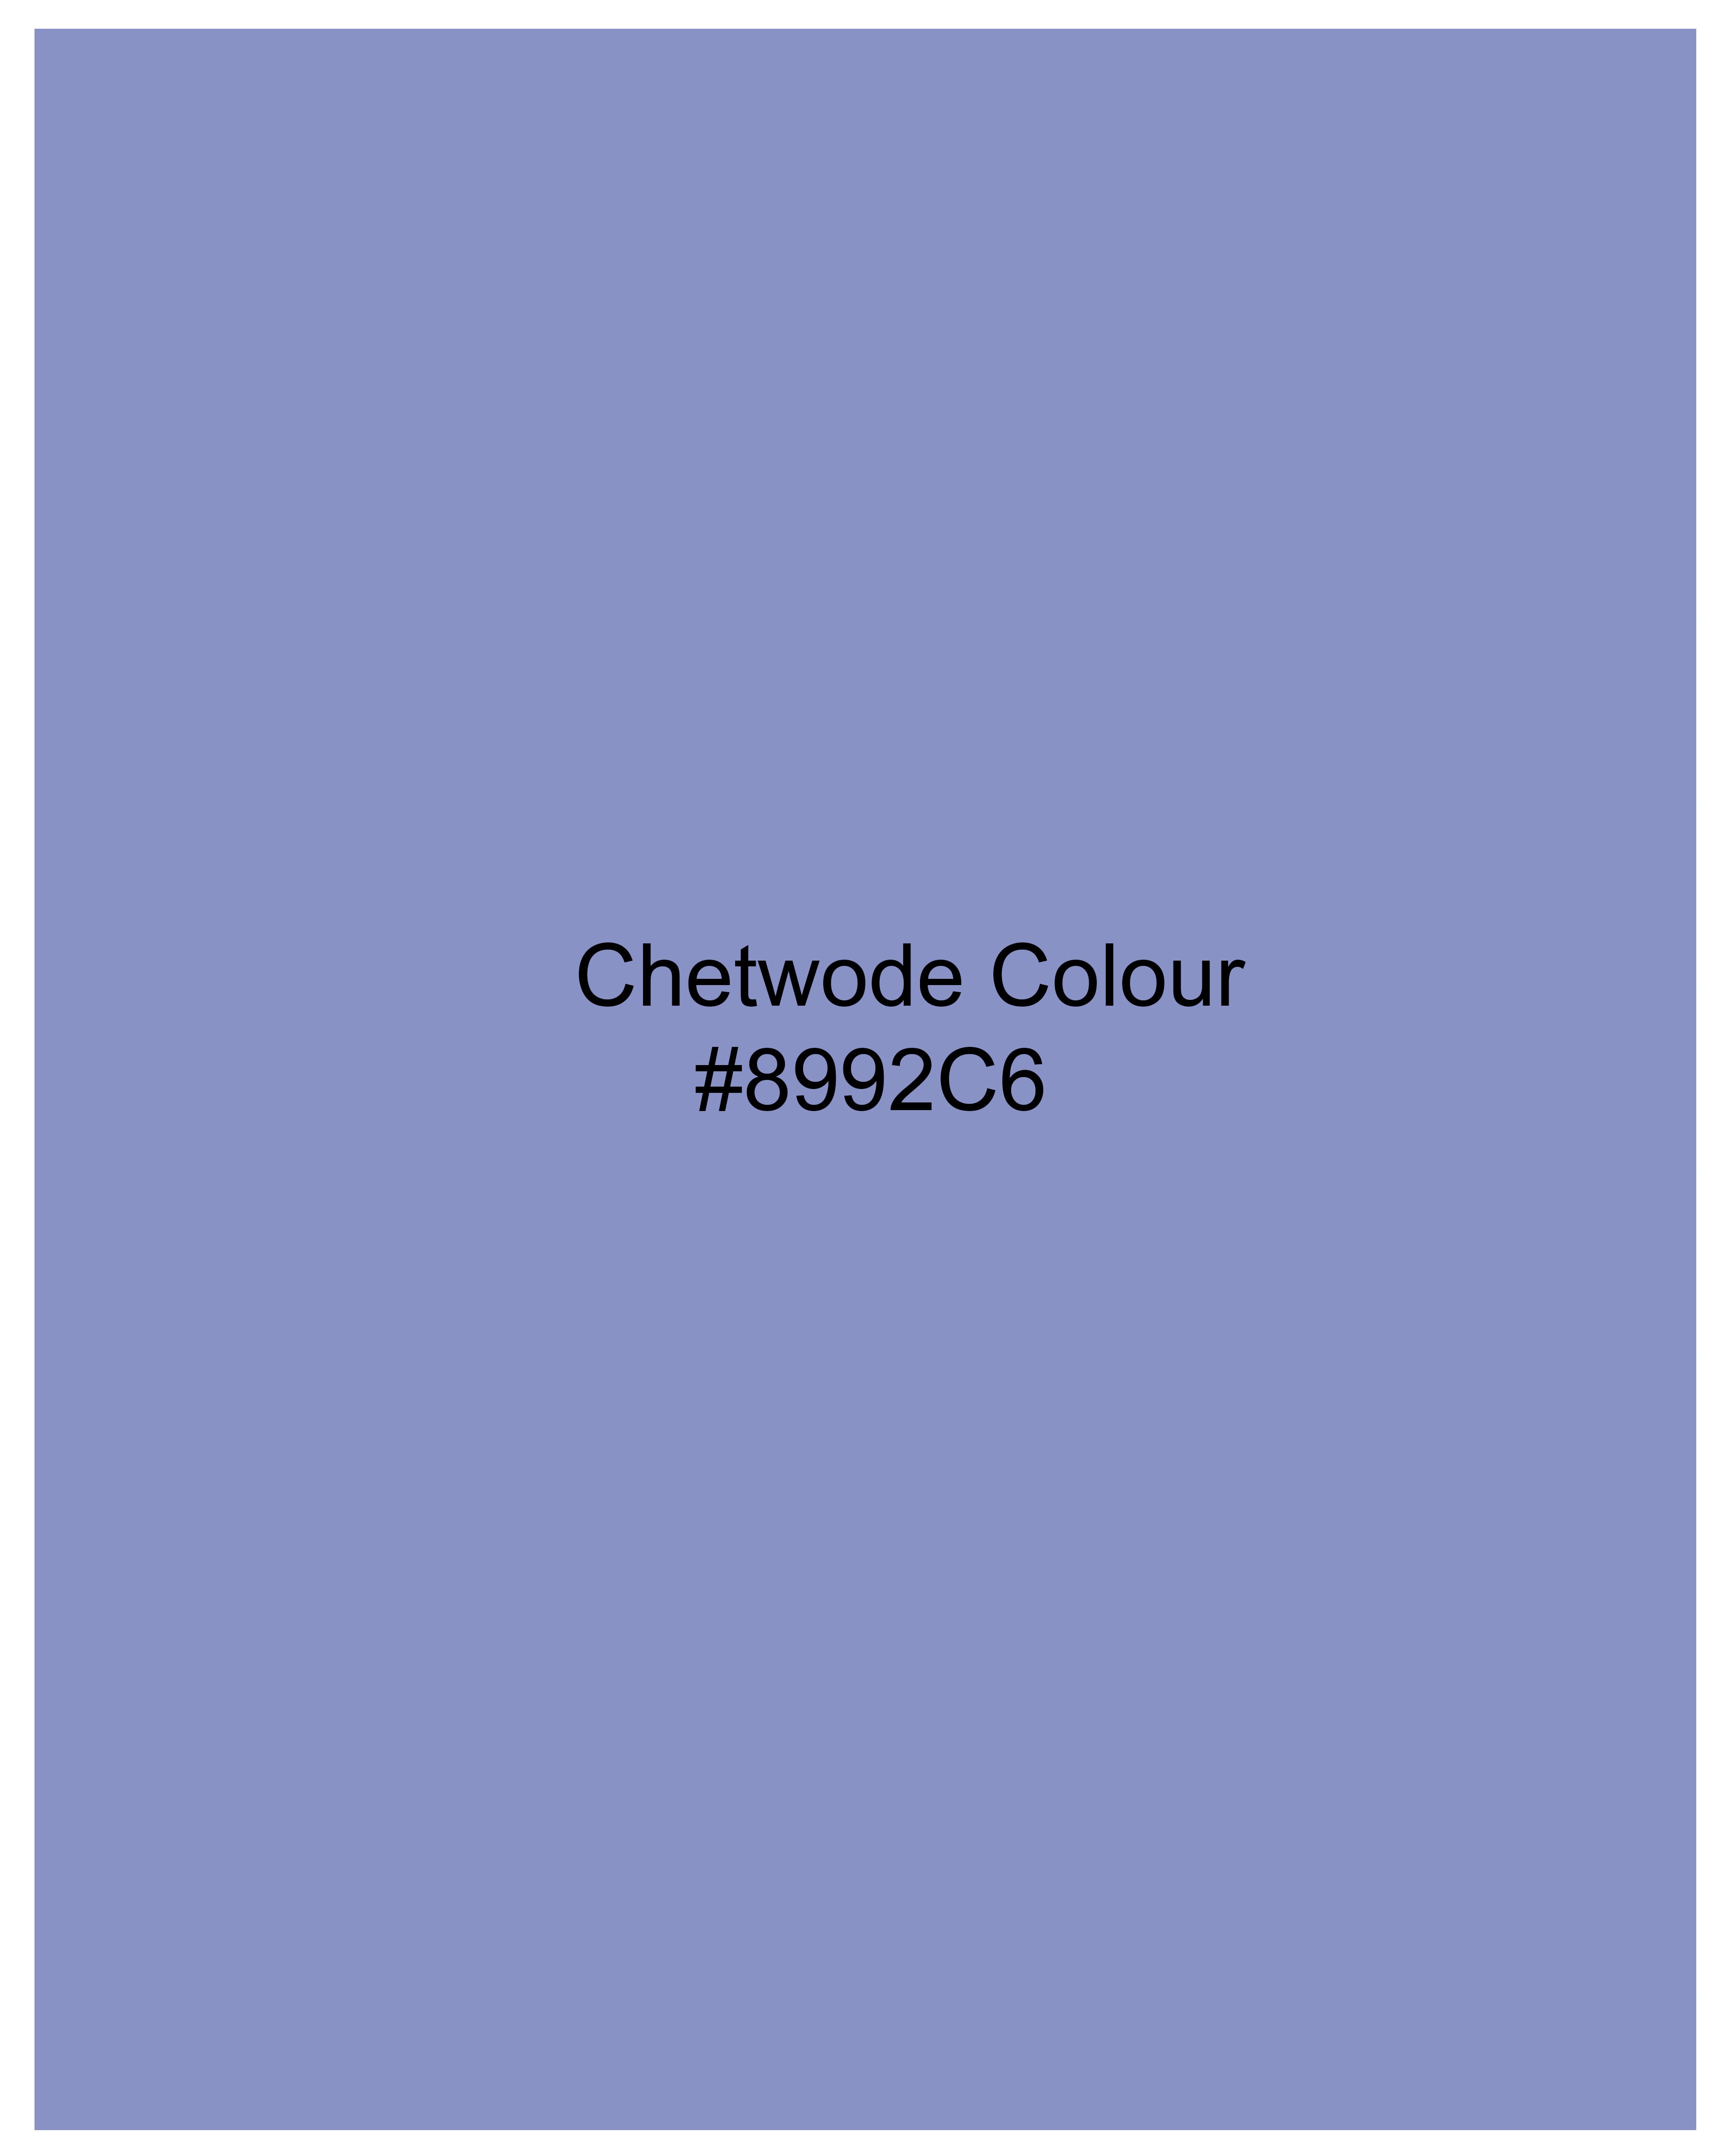 Chetwode Blue Royal Oxford Shirt 9663-38,9663-H-38,9663-39,9663-H-39,9663-40,9663-H-40,9663-42,9663-H-42,9663-44,9663-H-44,9663-46,9663-H-46,9663-48,9663-H-48,9663-50,9663-H-50,9663-52,9663-H-52